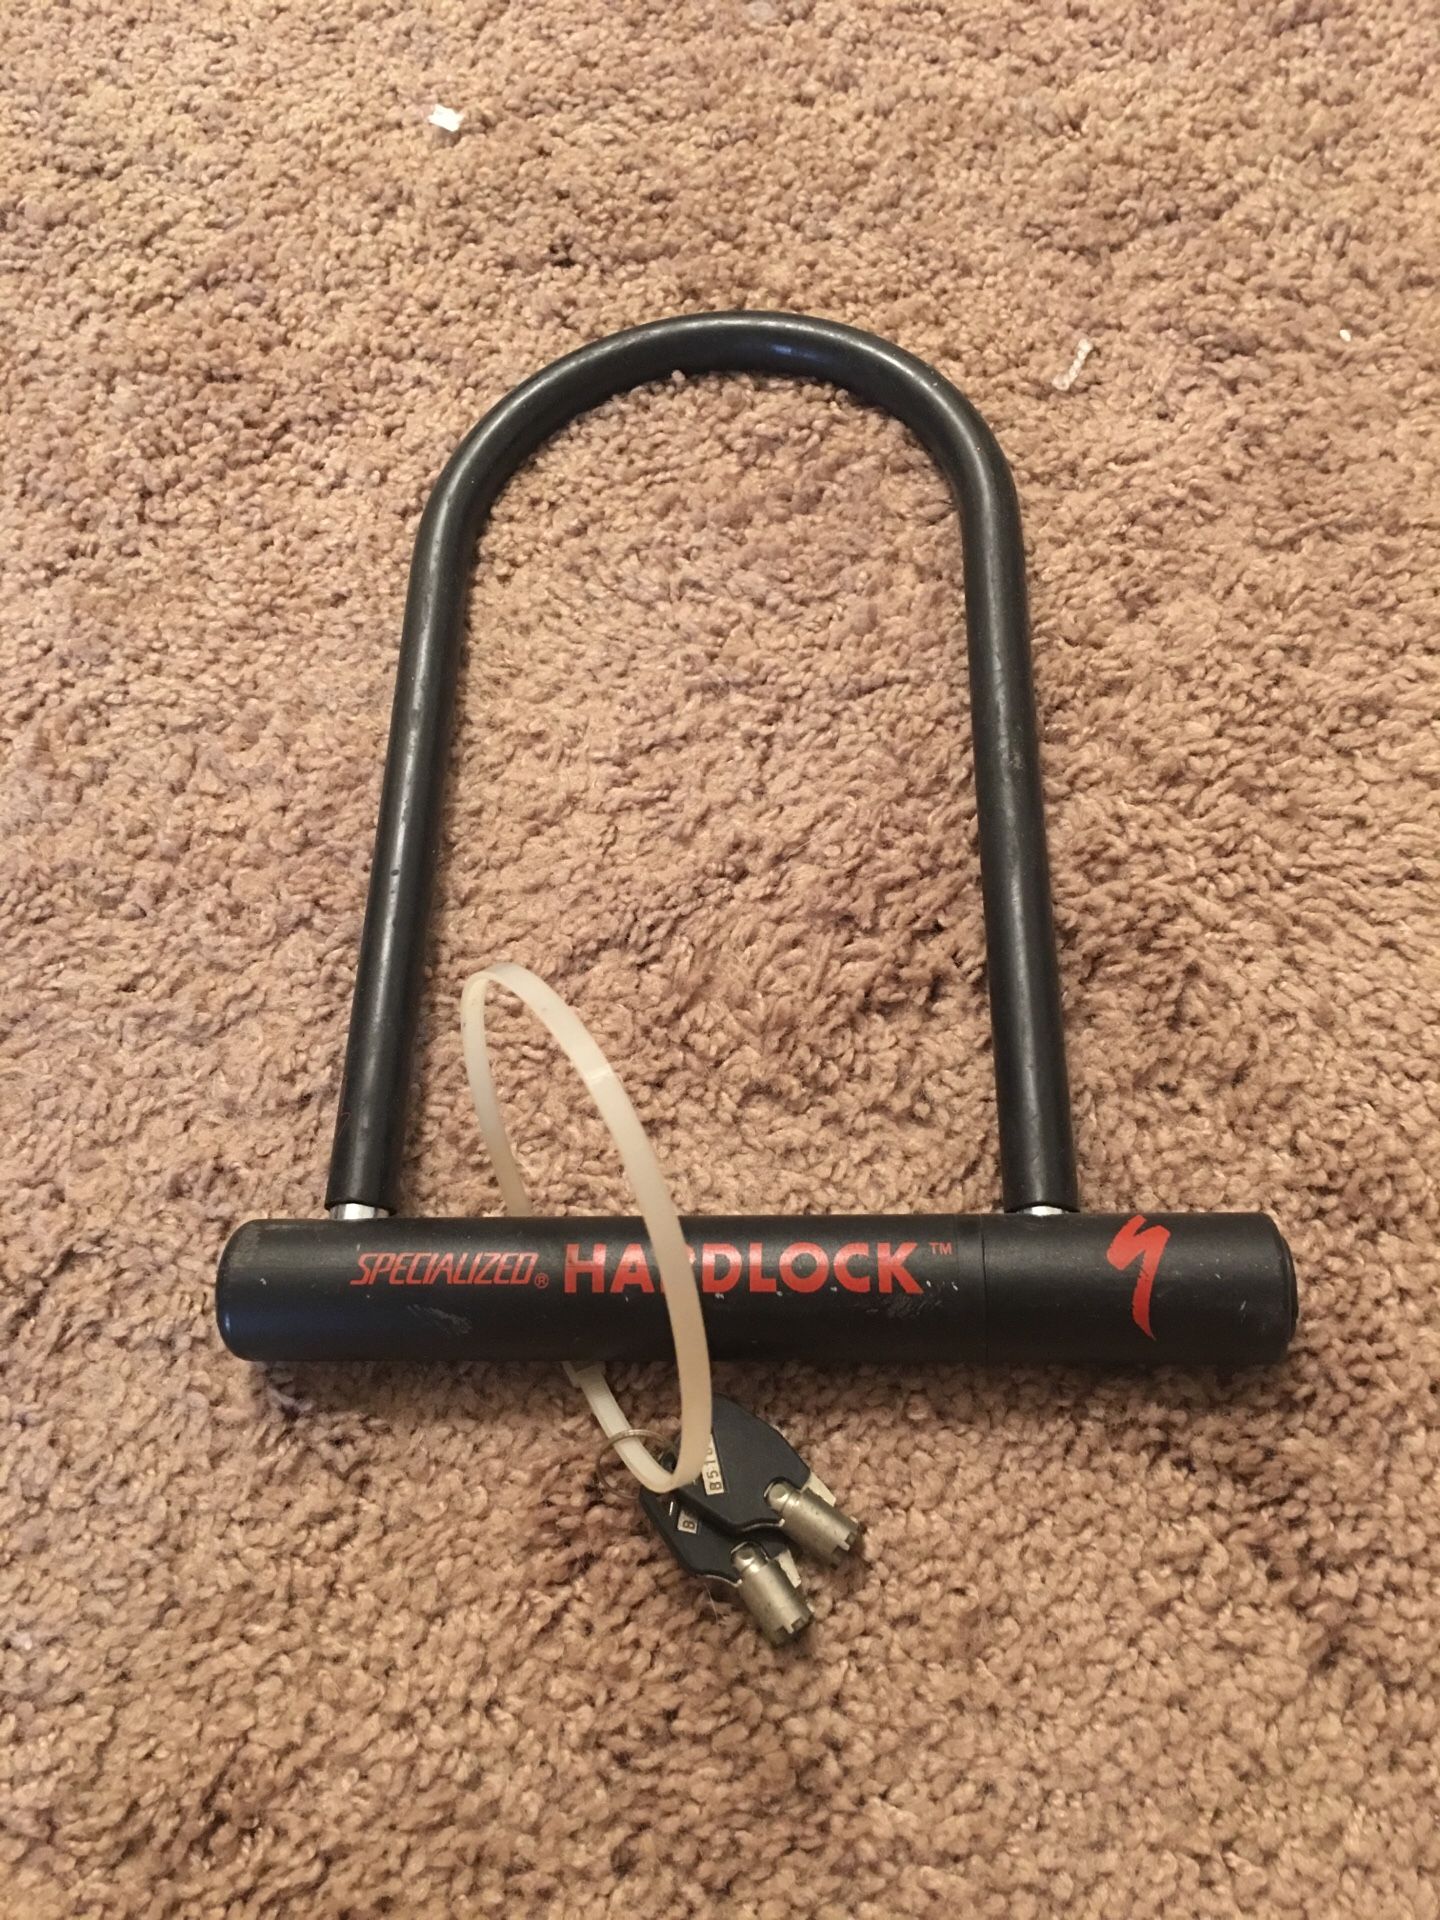 Hard lock bike rack with keys